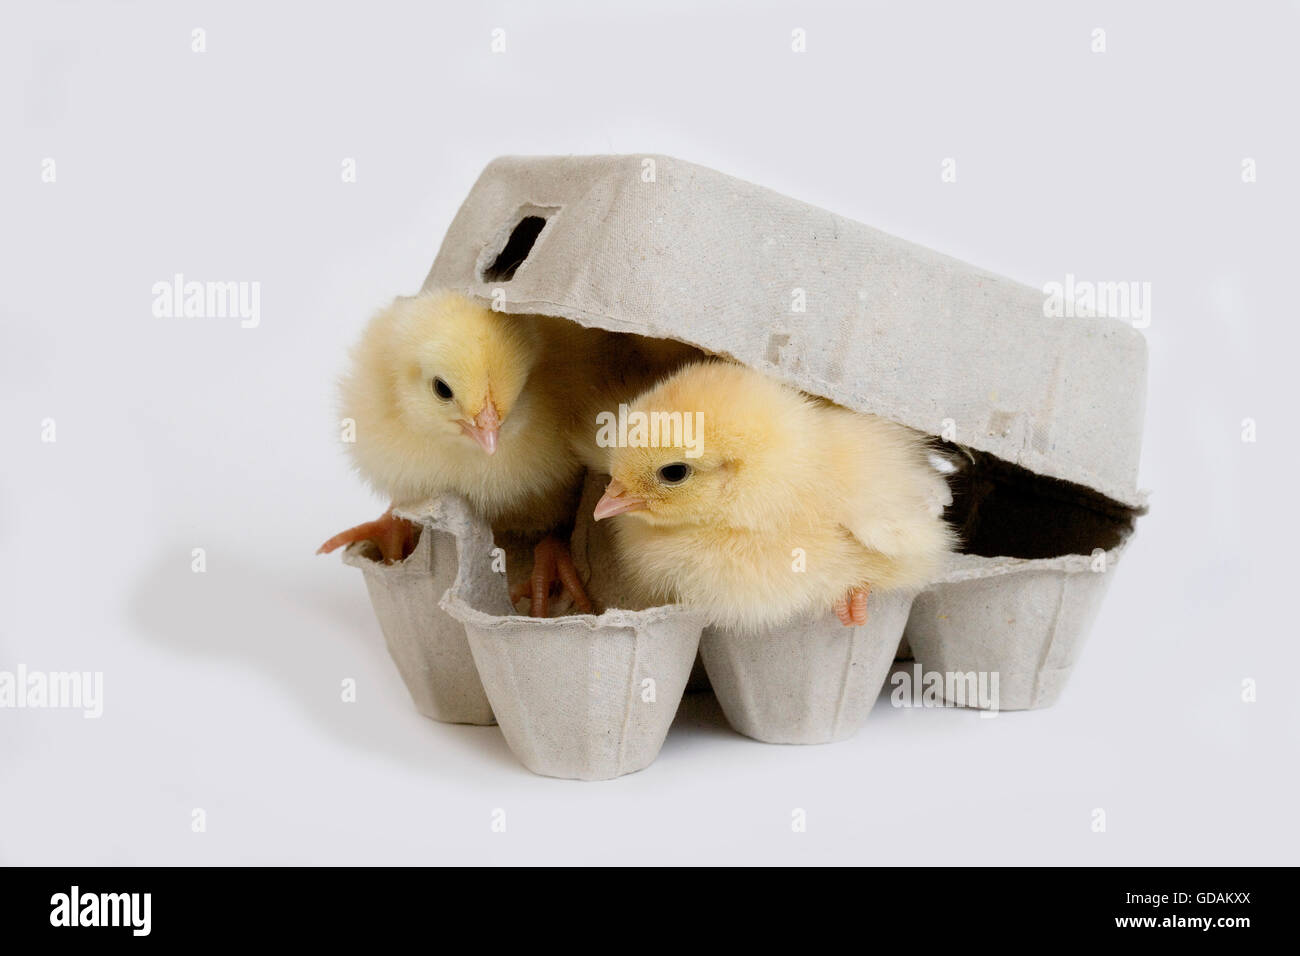 Chicks standing in Egg Box against White Background Stock Photo